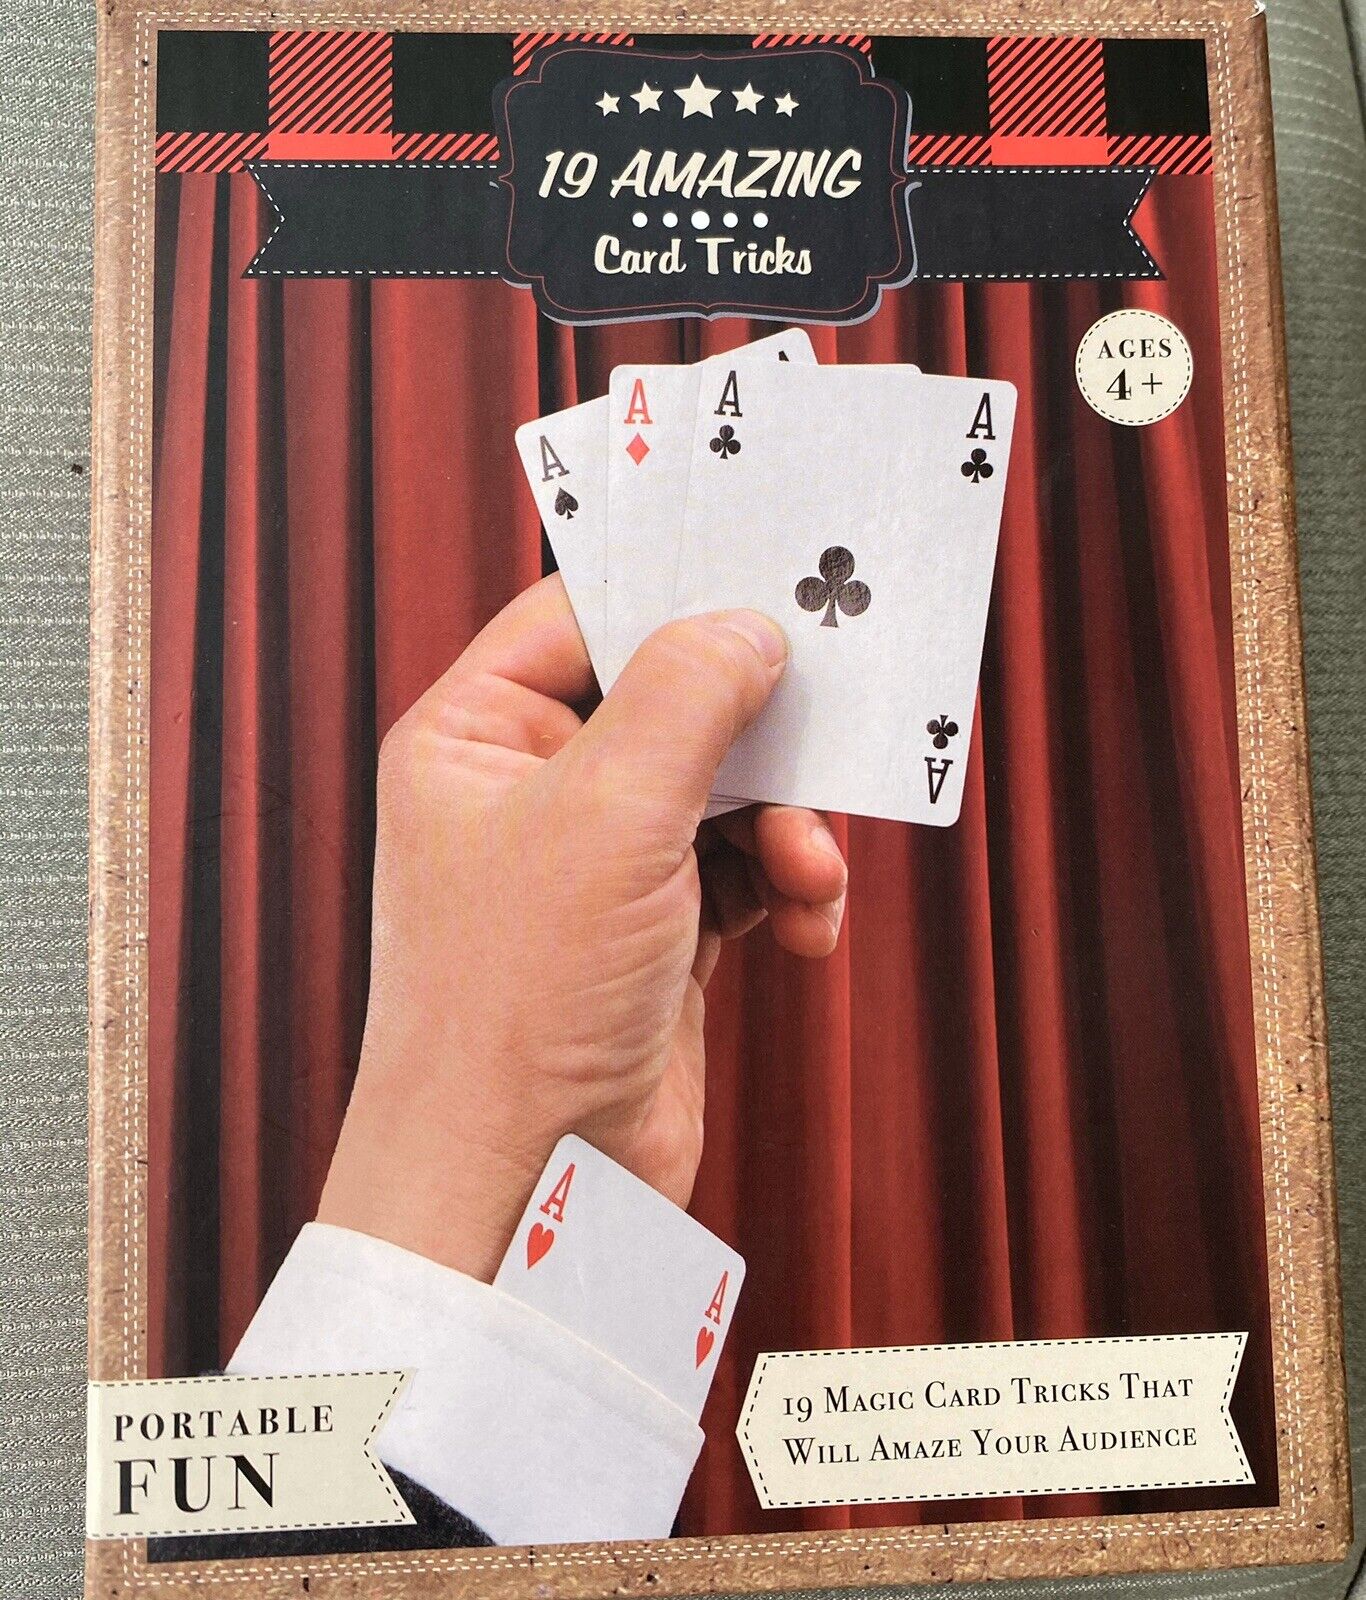 MerchSource Portable Fun Mini, 19 Amazing Card Tricks, Card Deck & Instructions